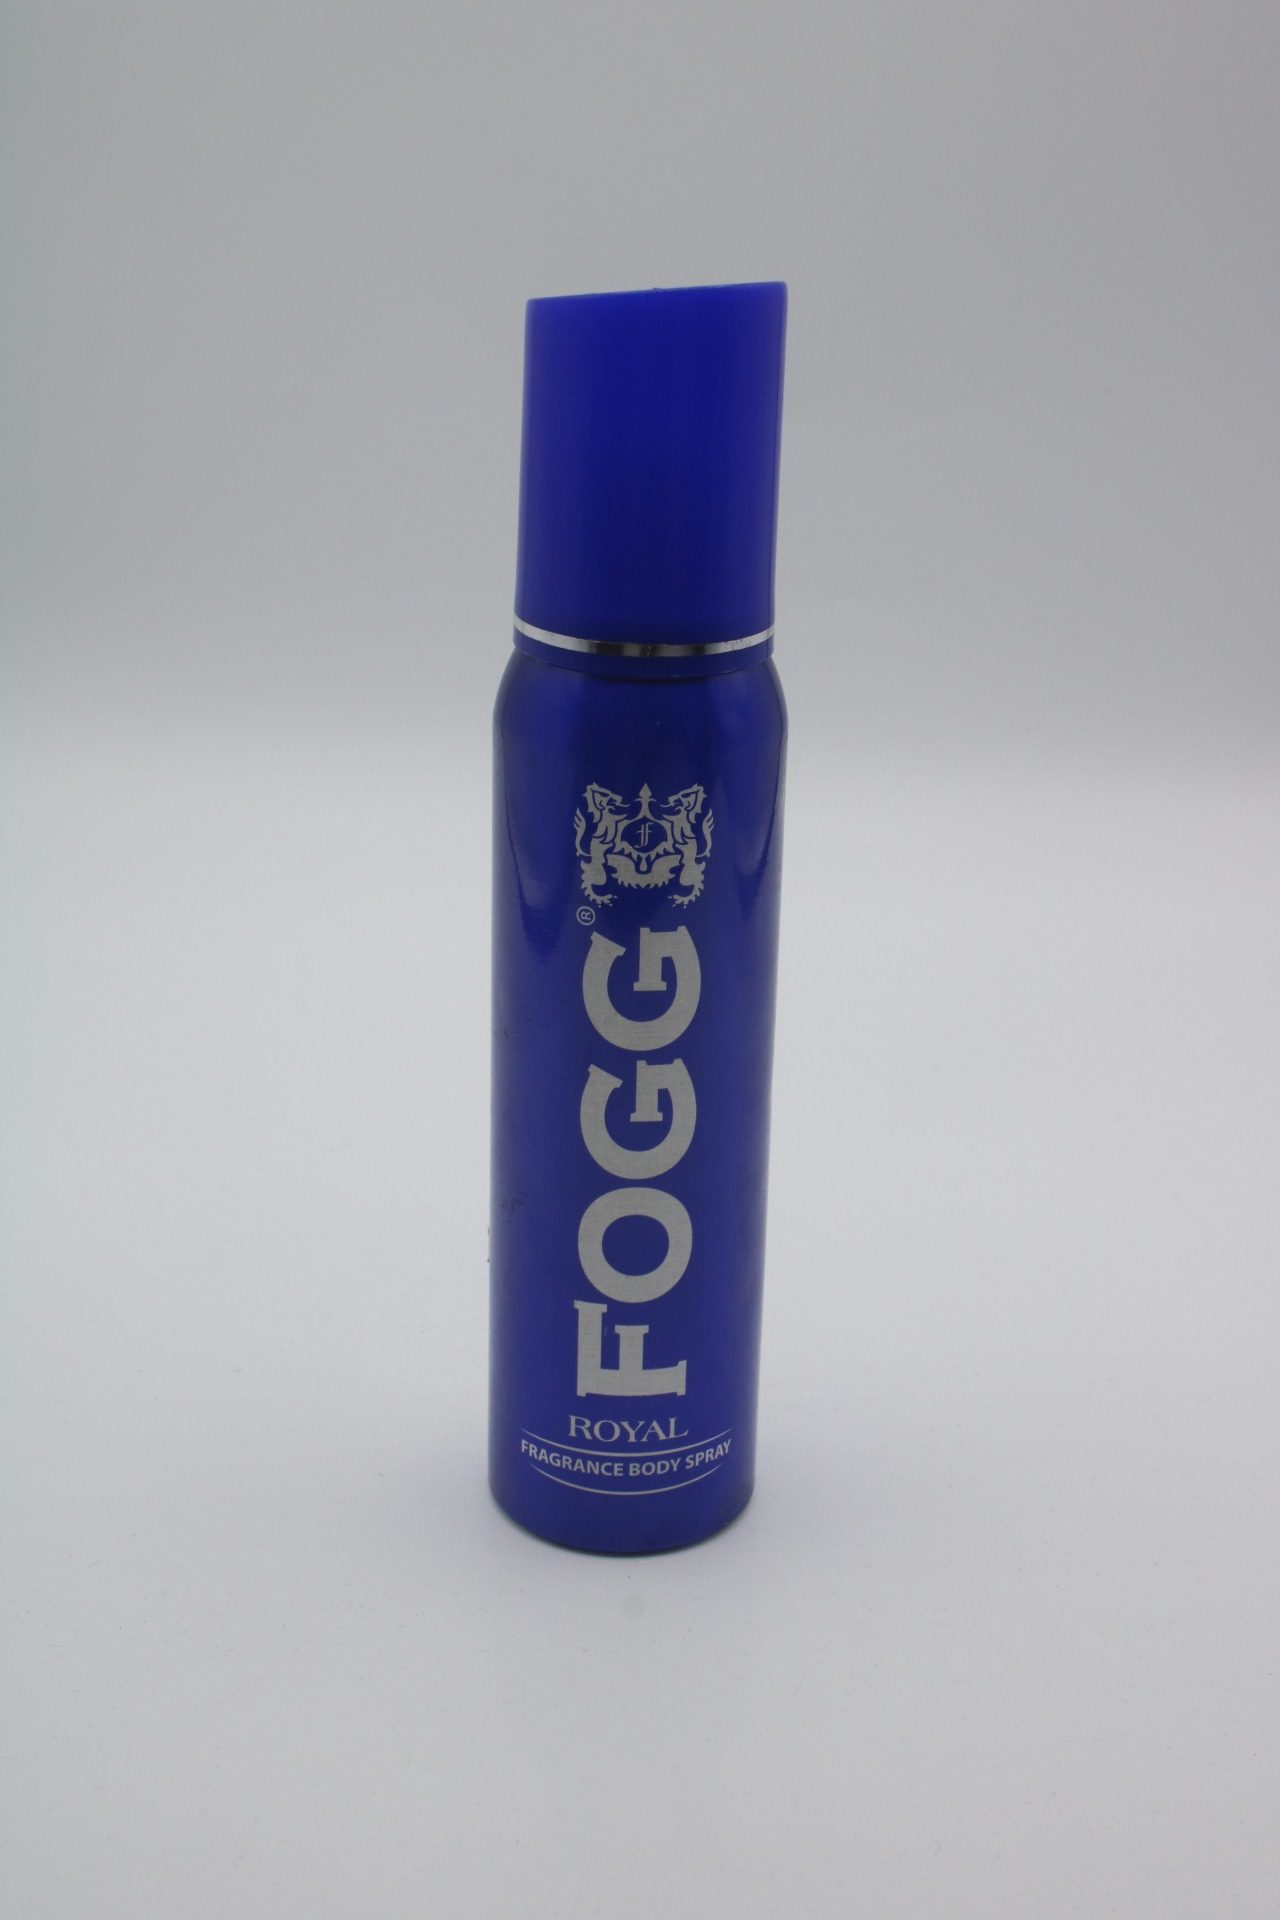 Fogg Royal Fregrance Body Spray